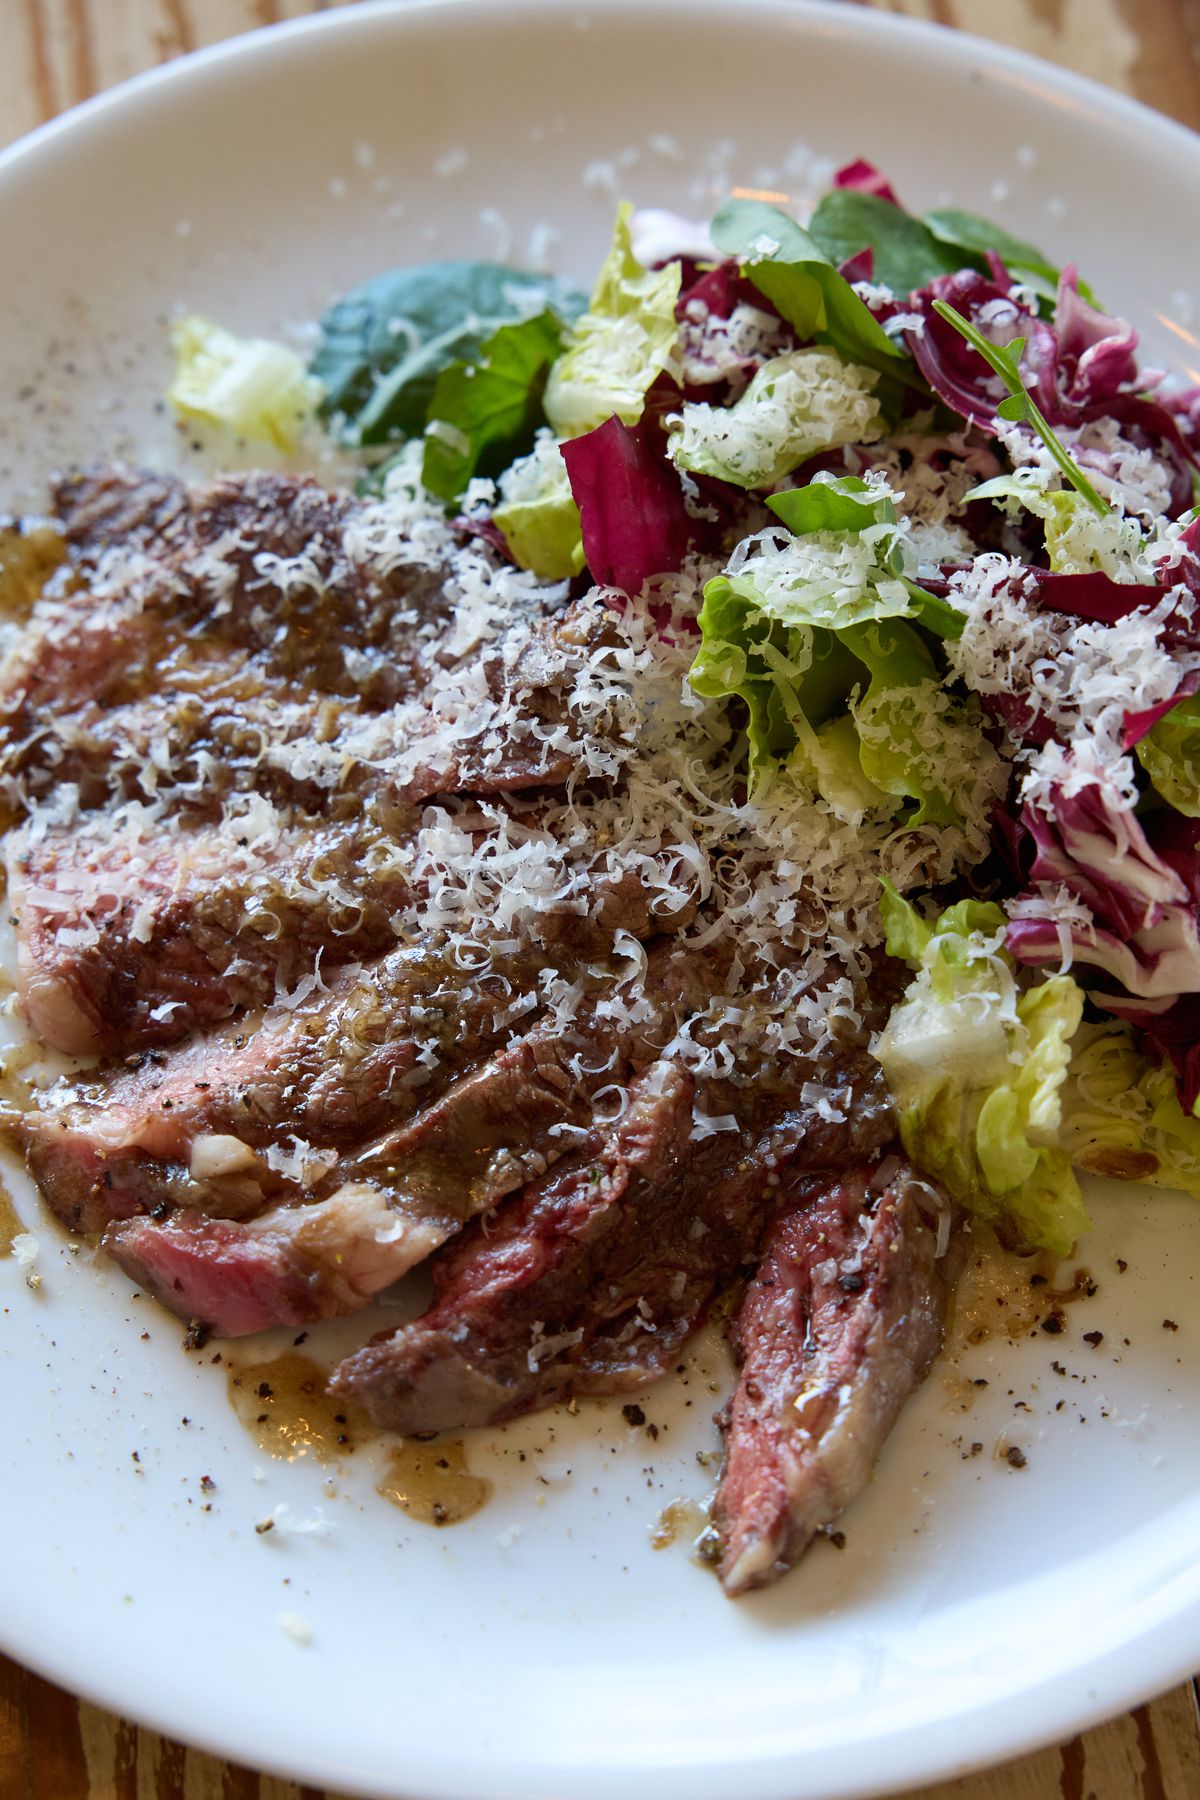 Sliced steak with salad.